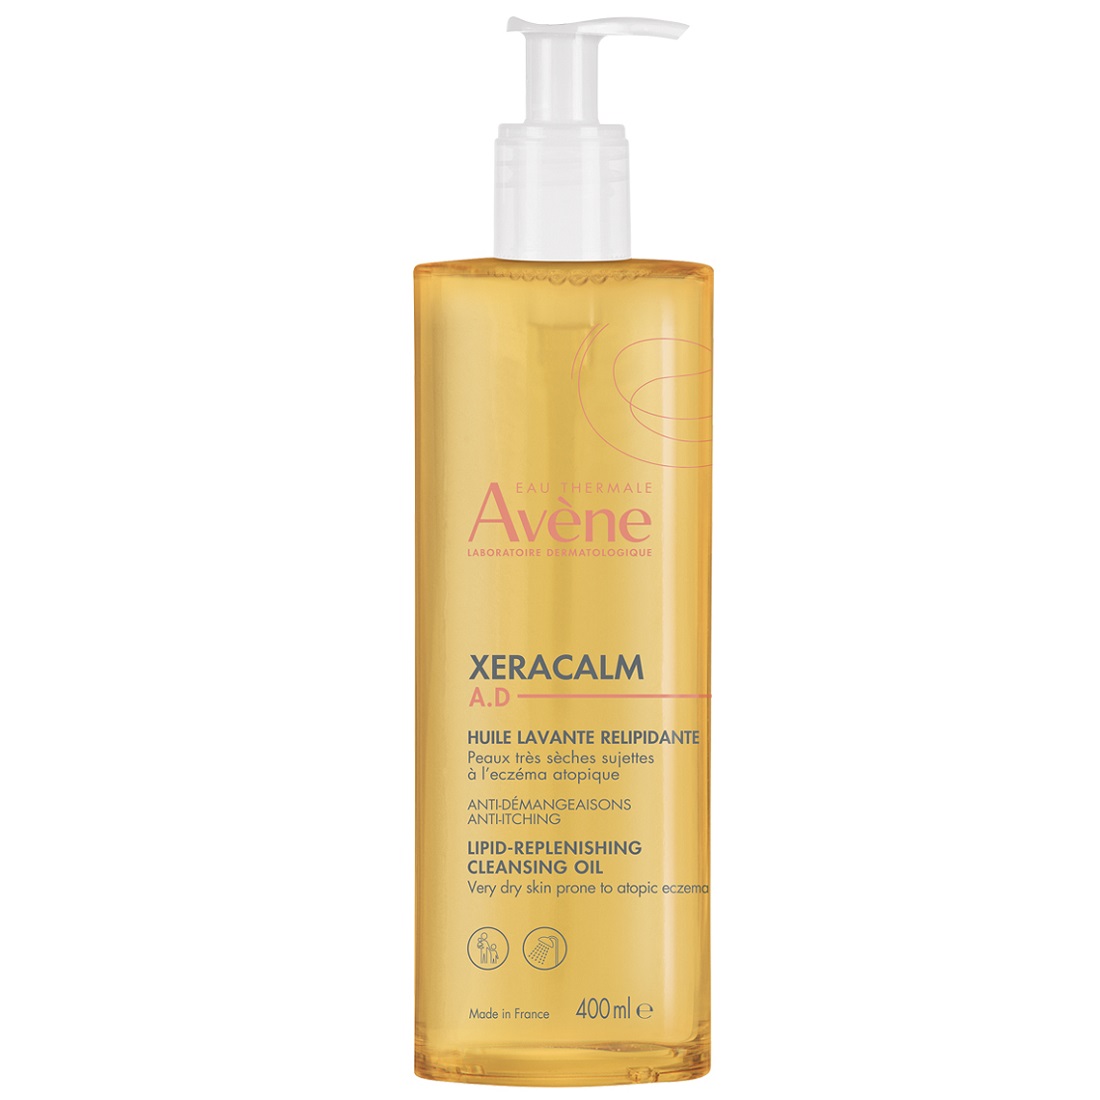 Avene Очищающее масло для лица и тела, 400 мл (Avene, XeraCalm) avene масло для тела лица и волос 100 мл avene body